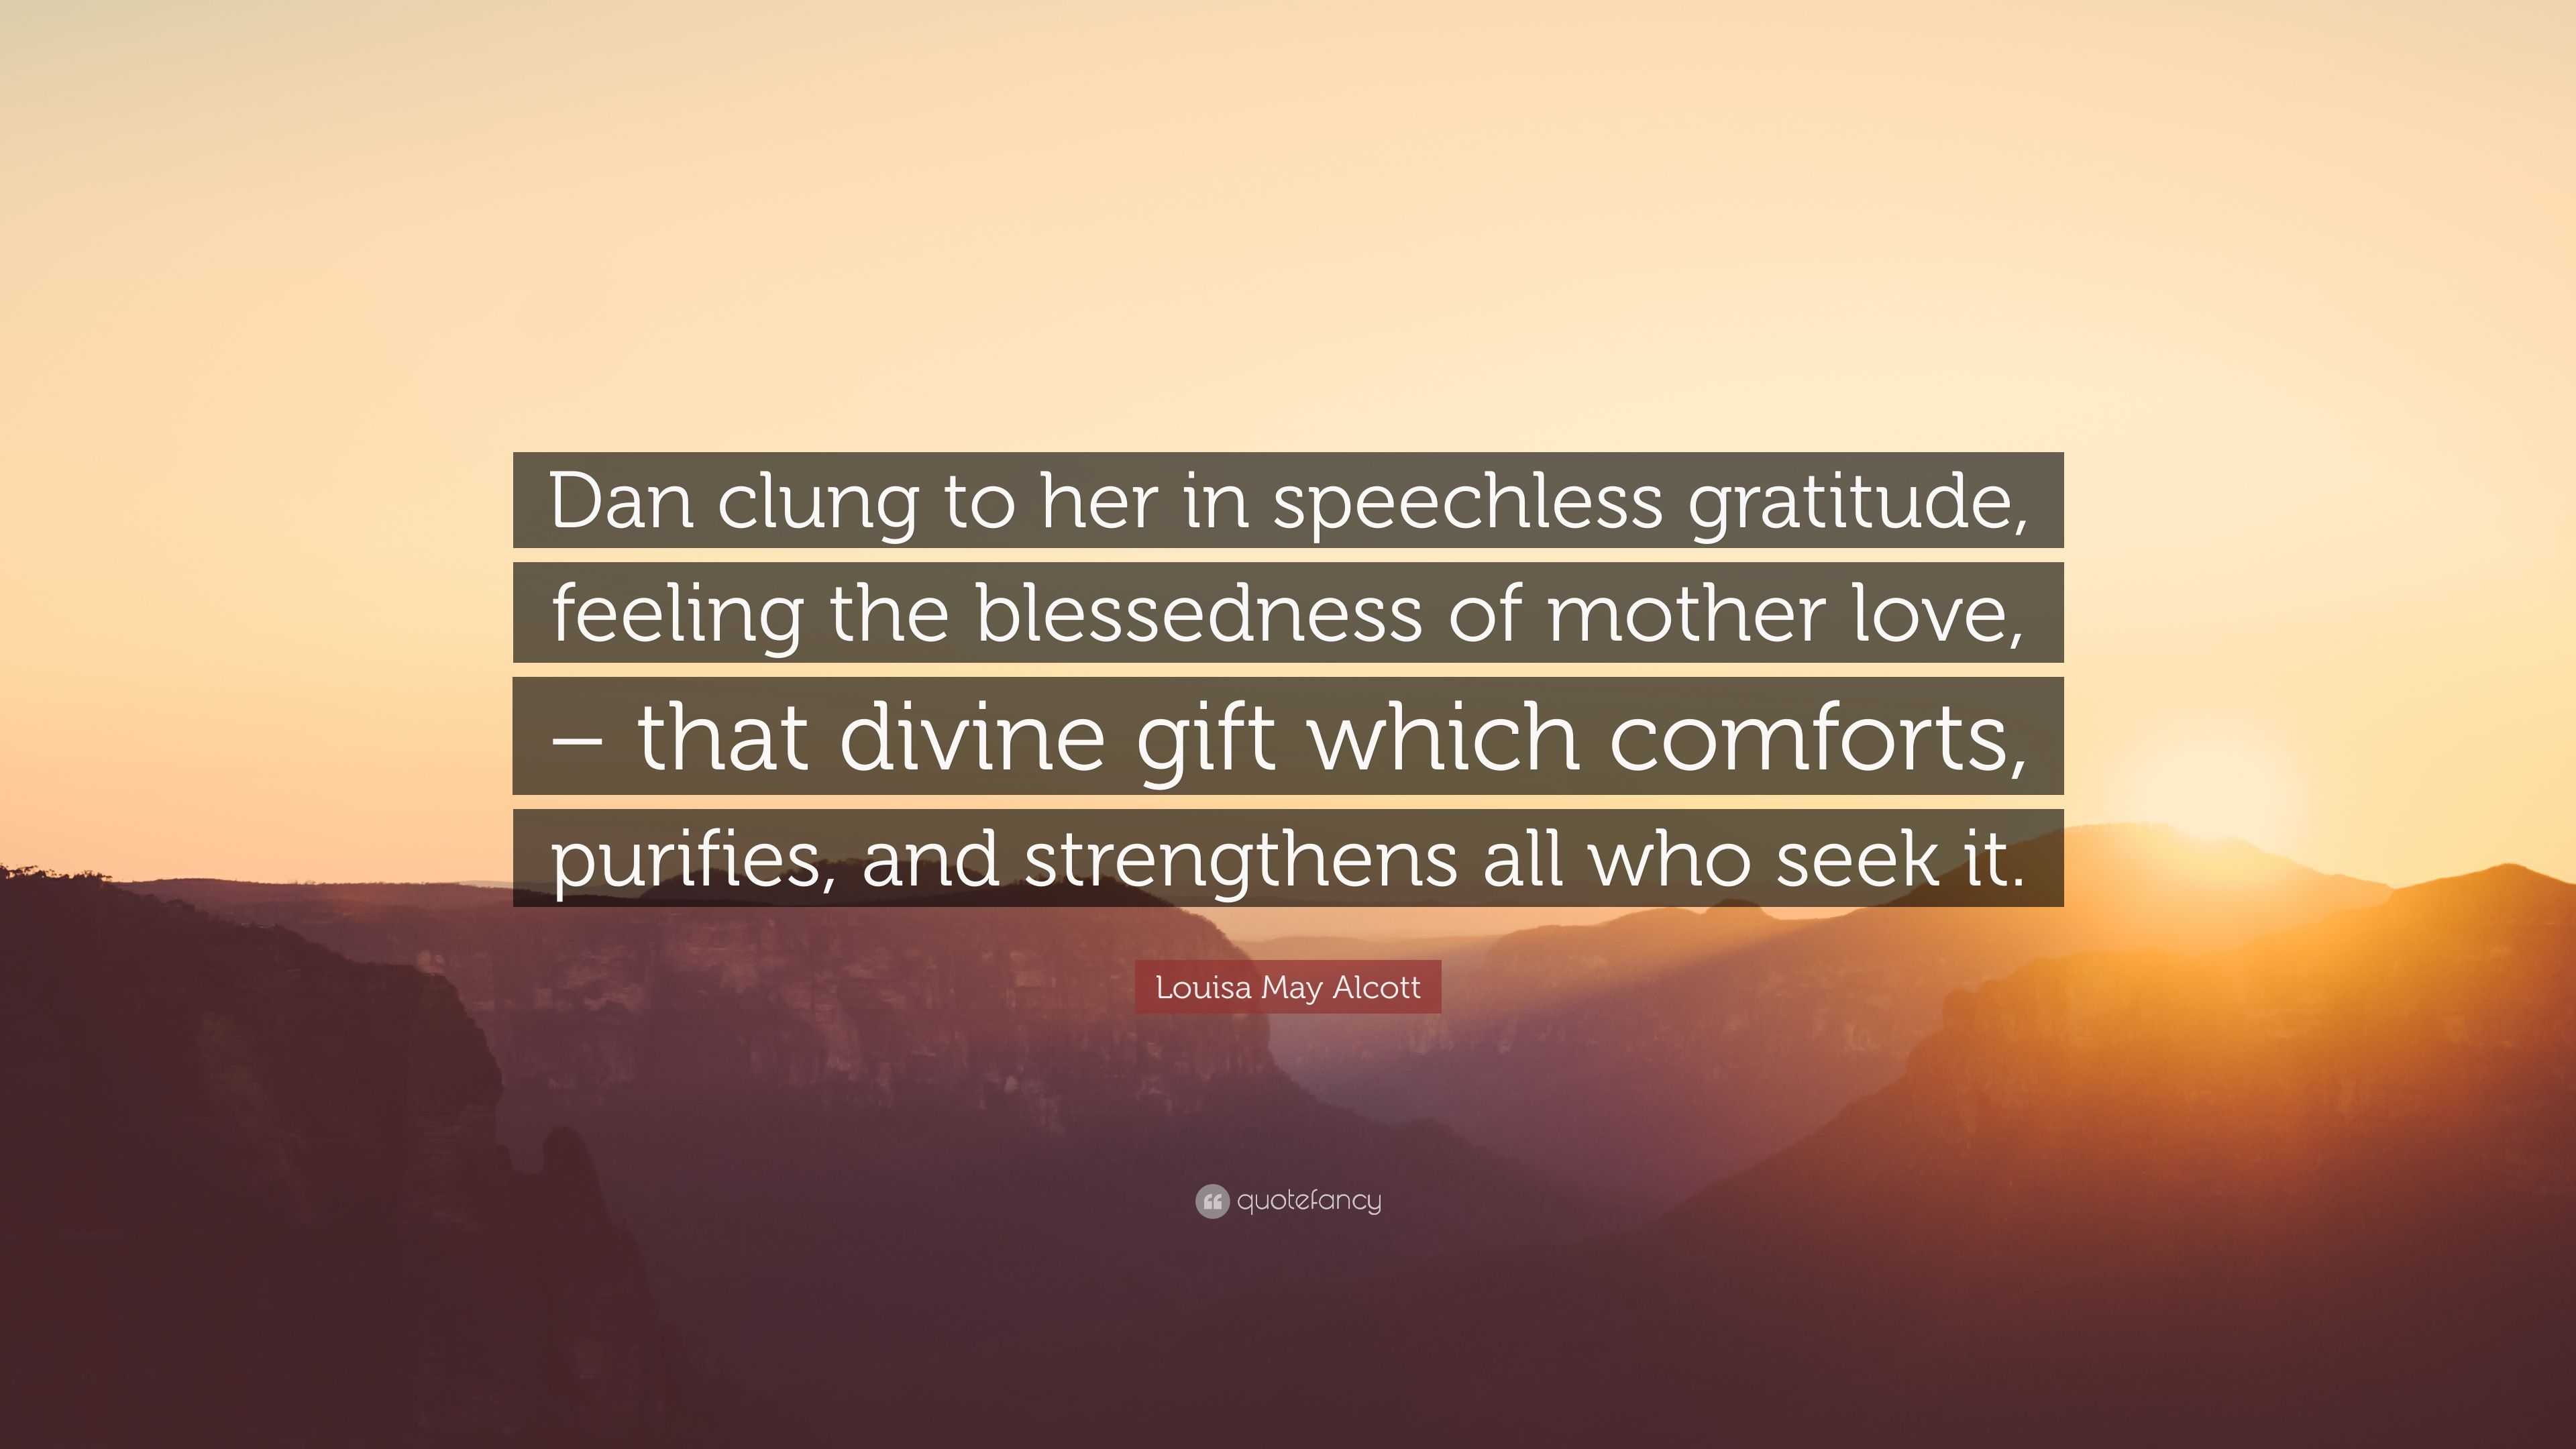 2701945 Louisa May Alcott Quote Dan clung to her in speechless gratitude